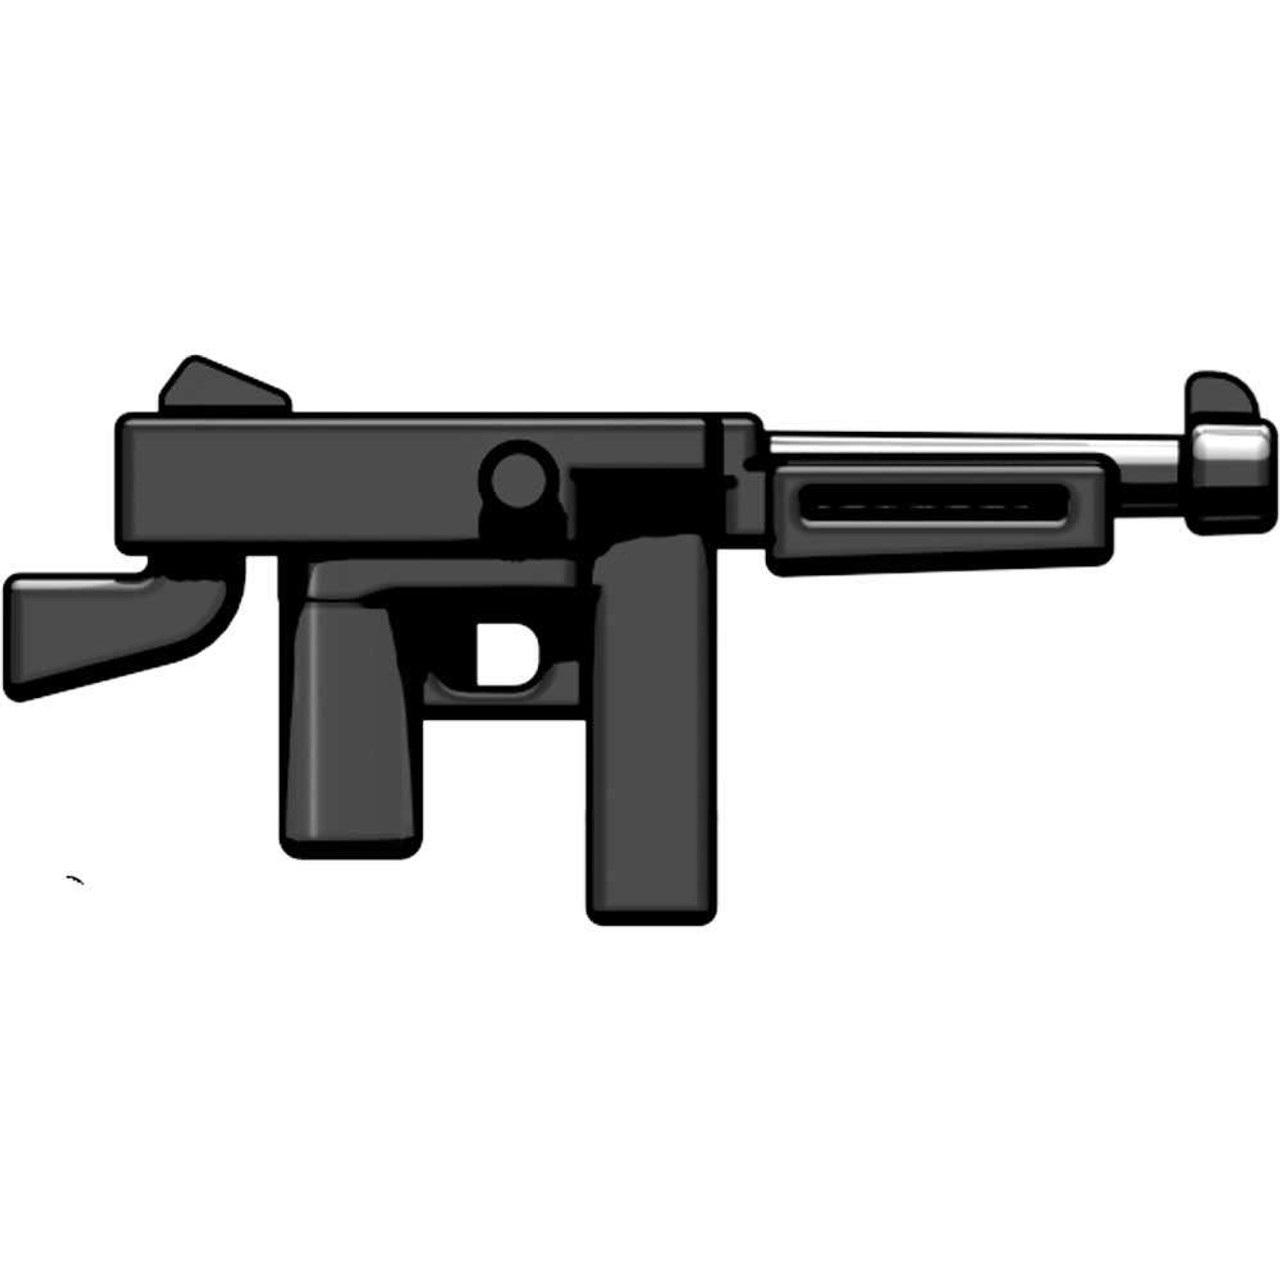 Brickarms Weapons M1a1 45 Caliber Smg 2 5 Black Toywiz - sten gun ww2 sub machine gun roblox